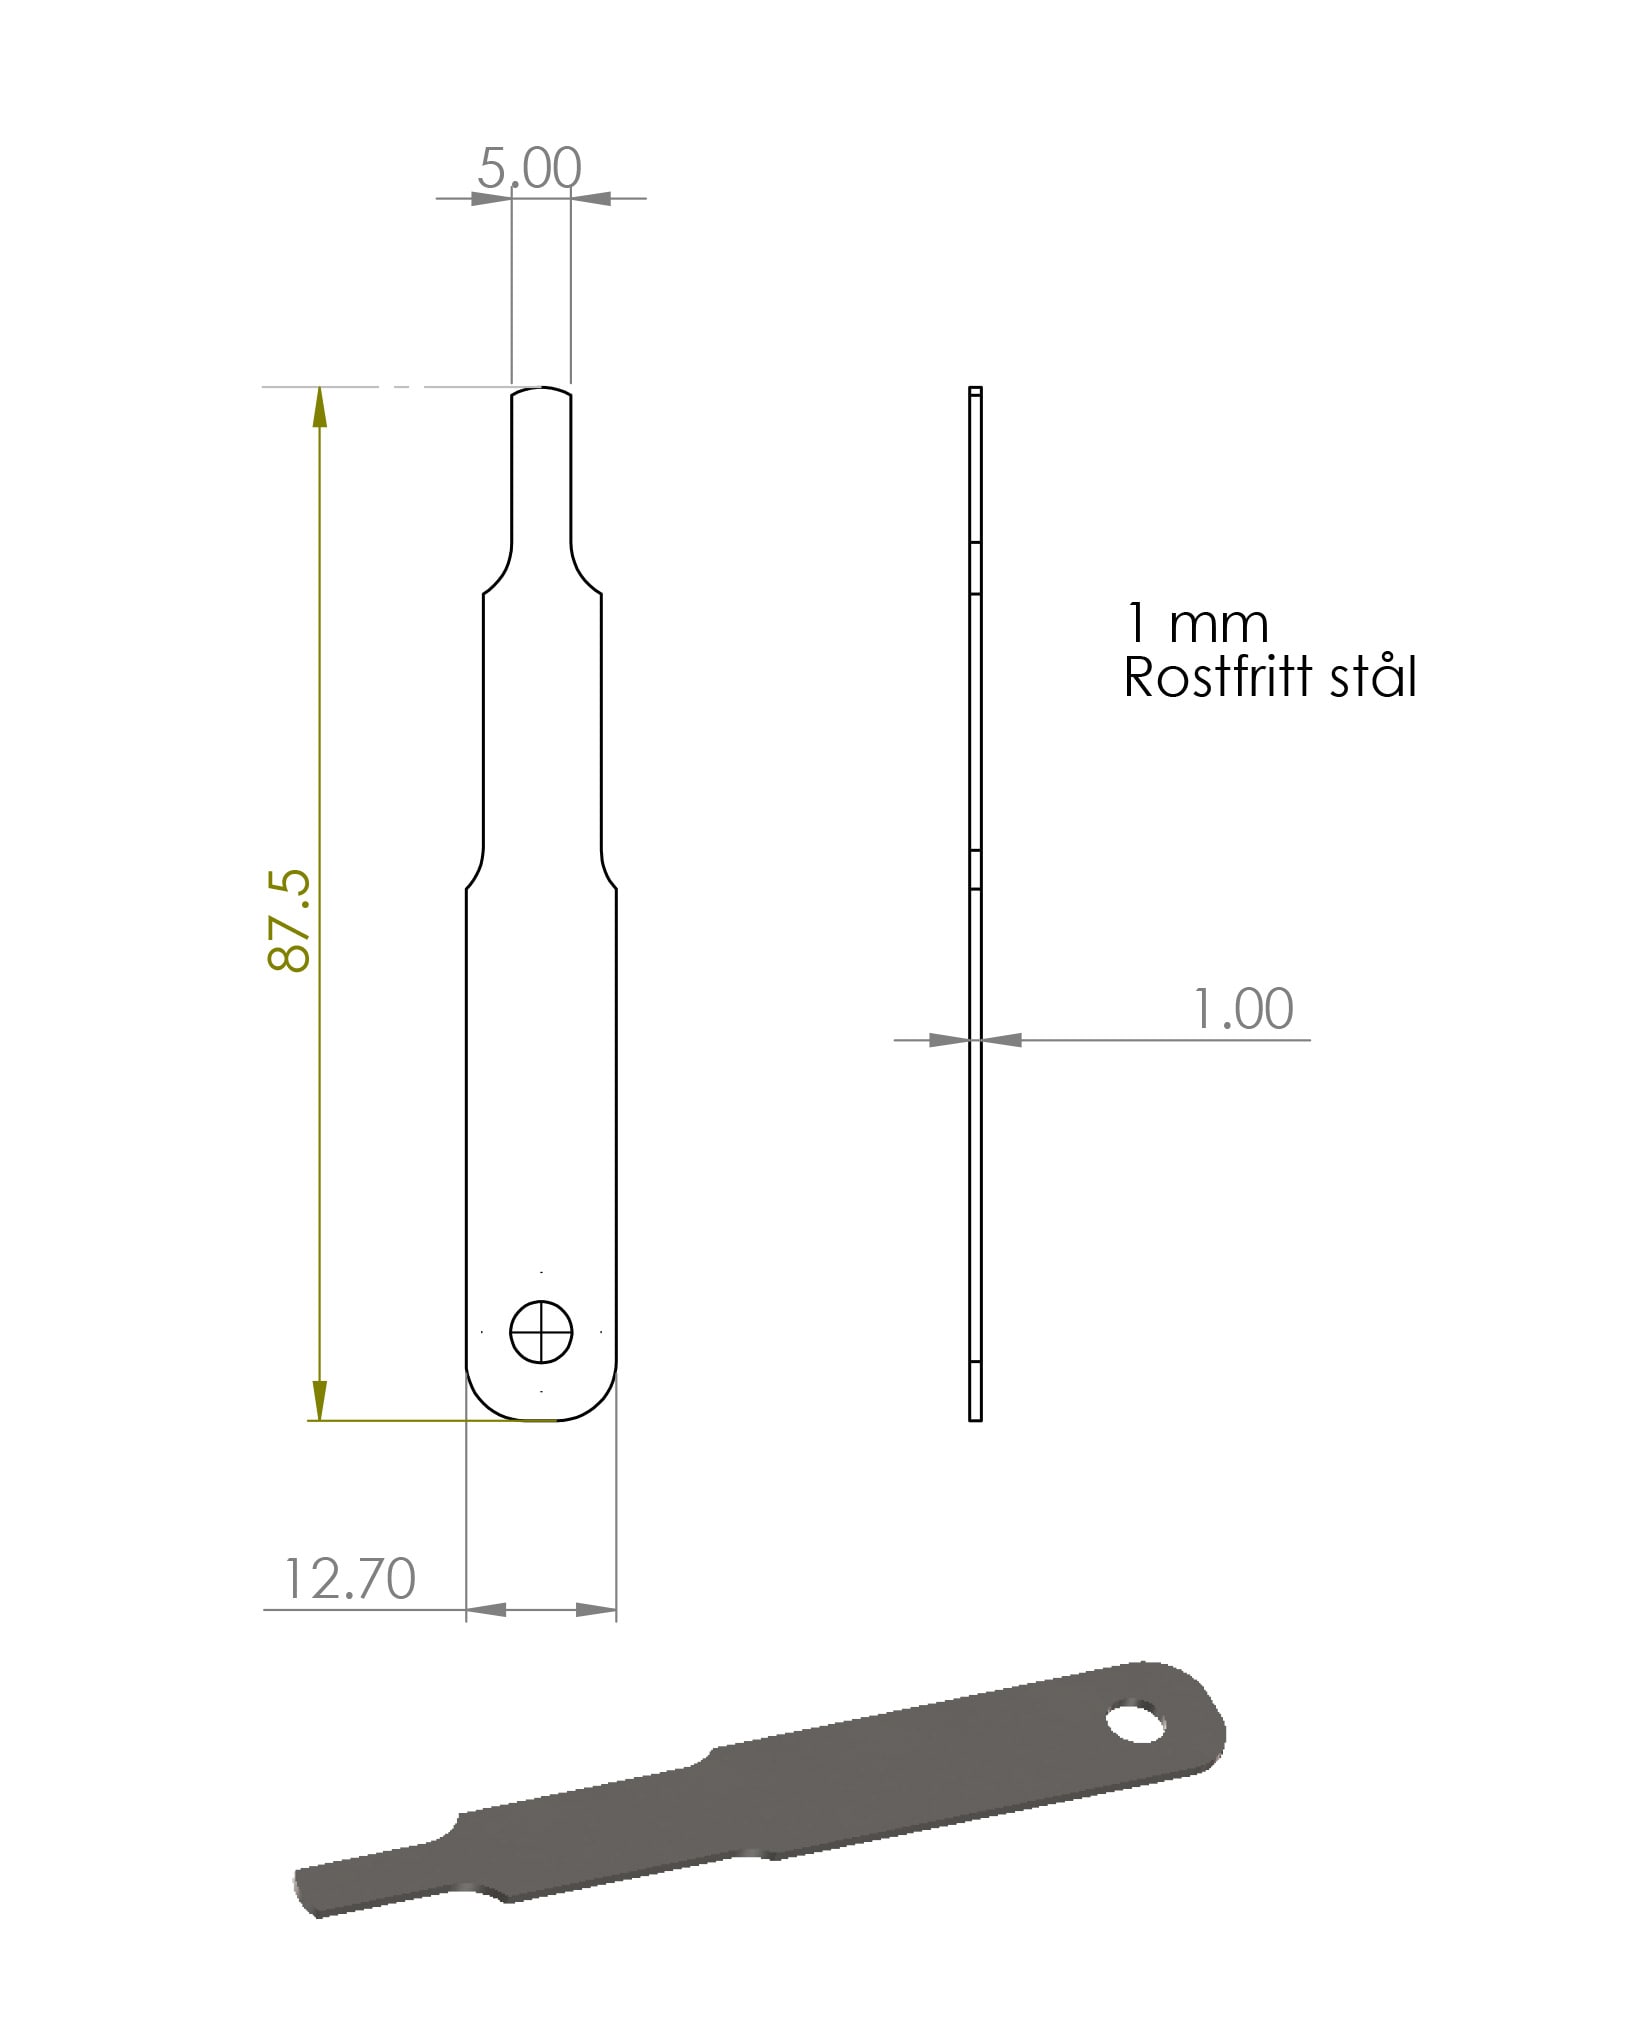 Feeler Gauge 1 mm for Raket 95 CIK/FIA Standard